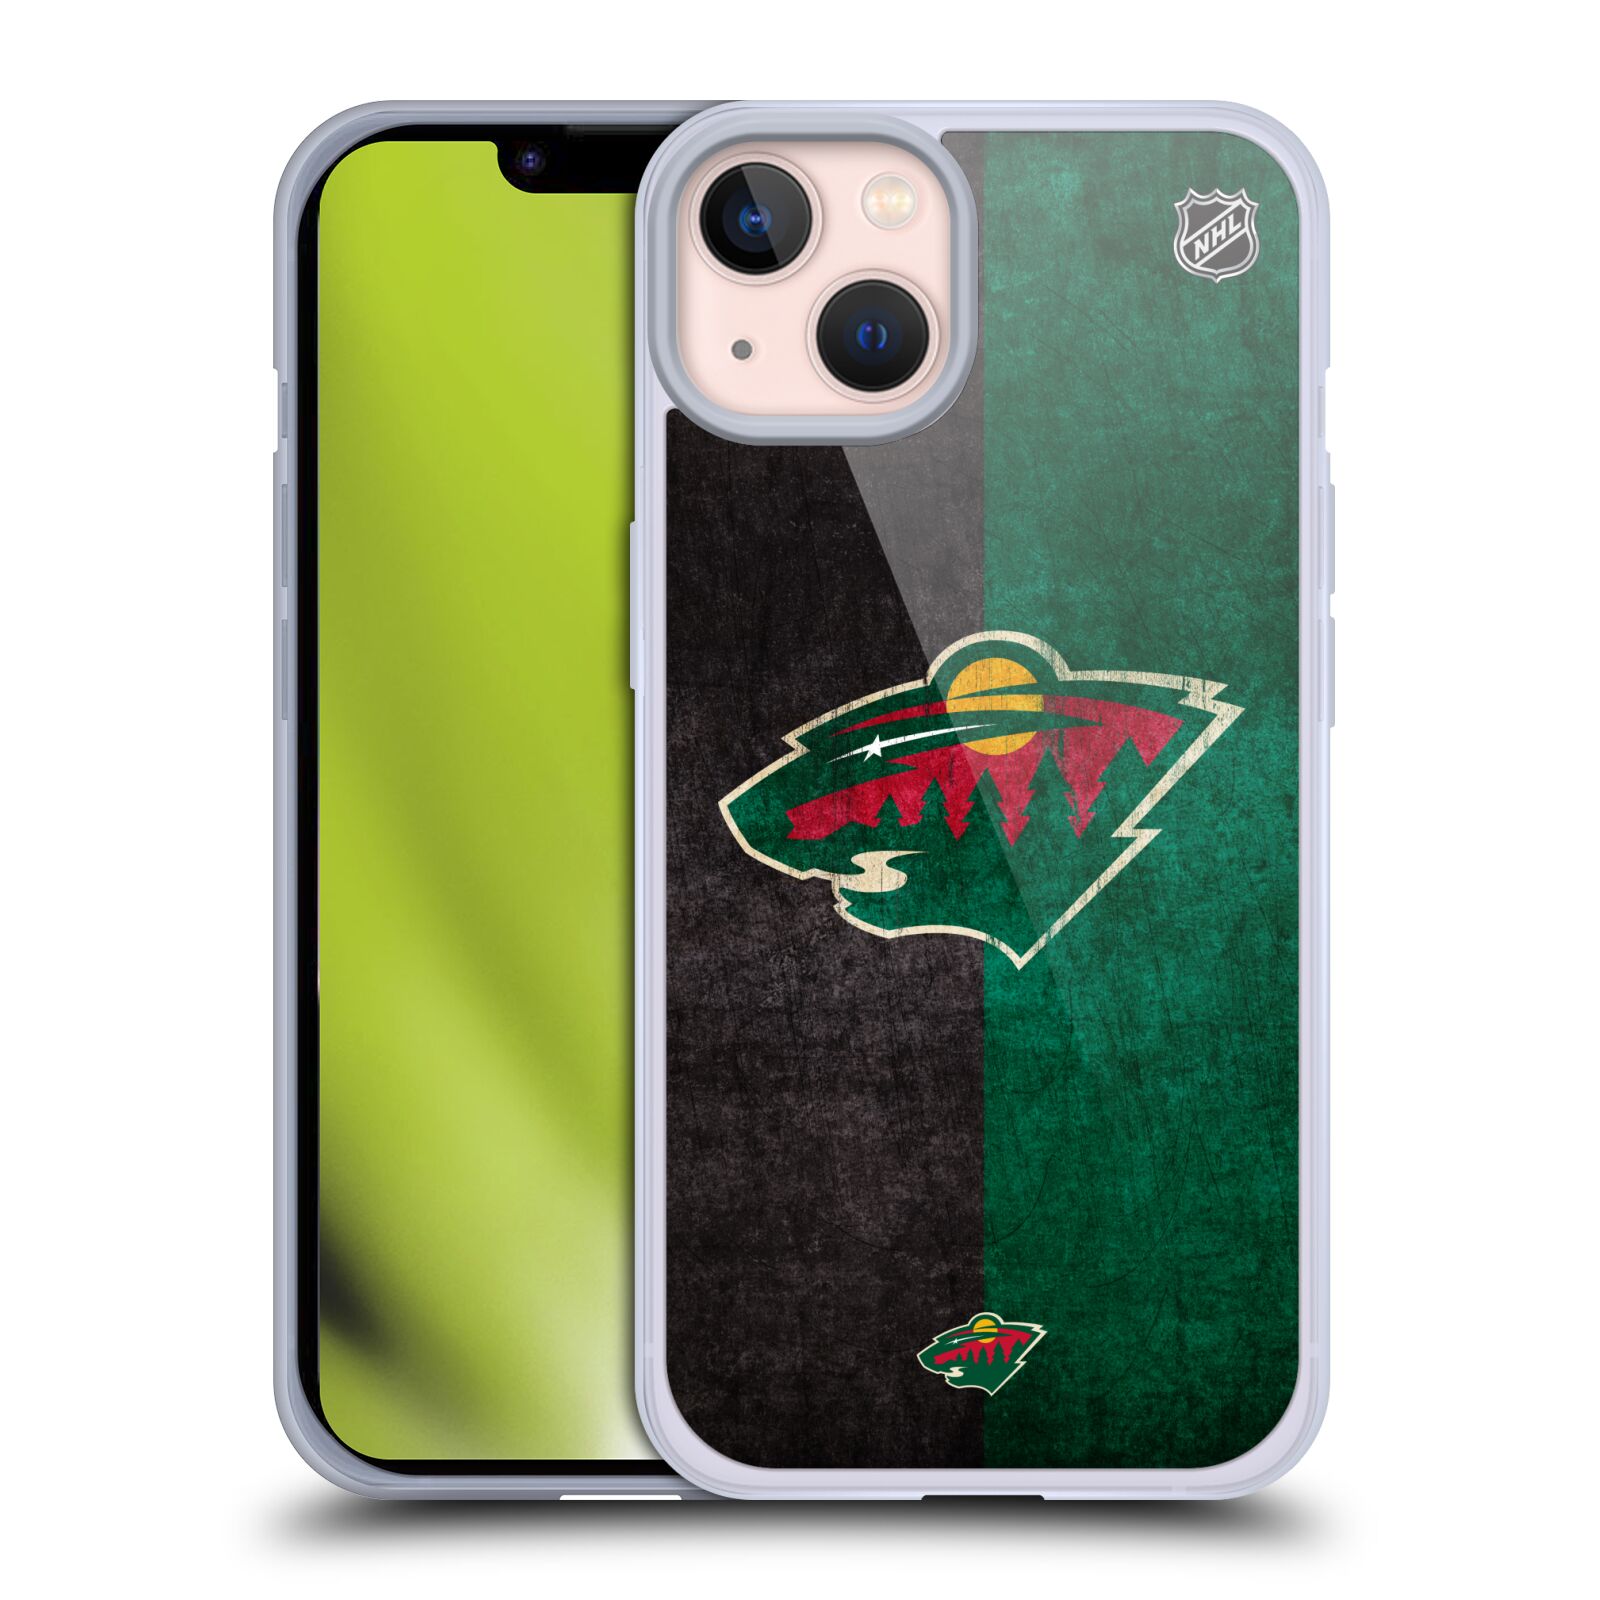 Silikonové pouzdro na mobil Apple iPhone 13 - NHL - Půlené logo Minnesota Wild (Silikonový kryt, obal, pouzdro na mobilní telefon Apple iPhone 13 s licencovaným motivem NHL - Půlené logo Minnesota Wild)